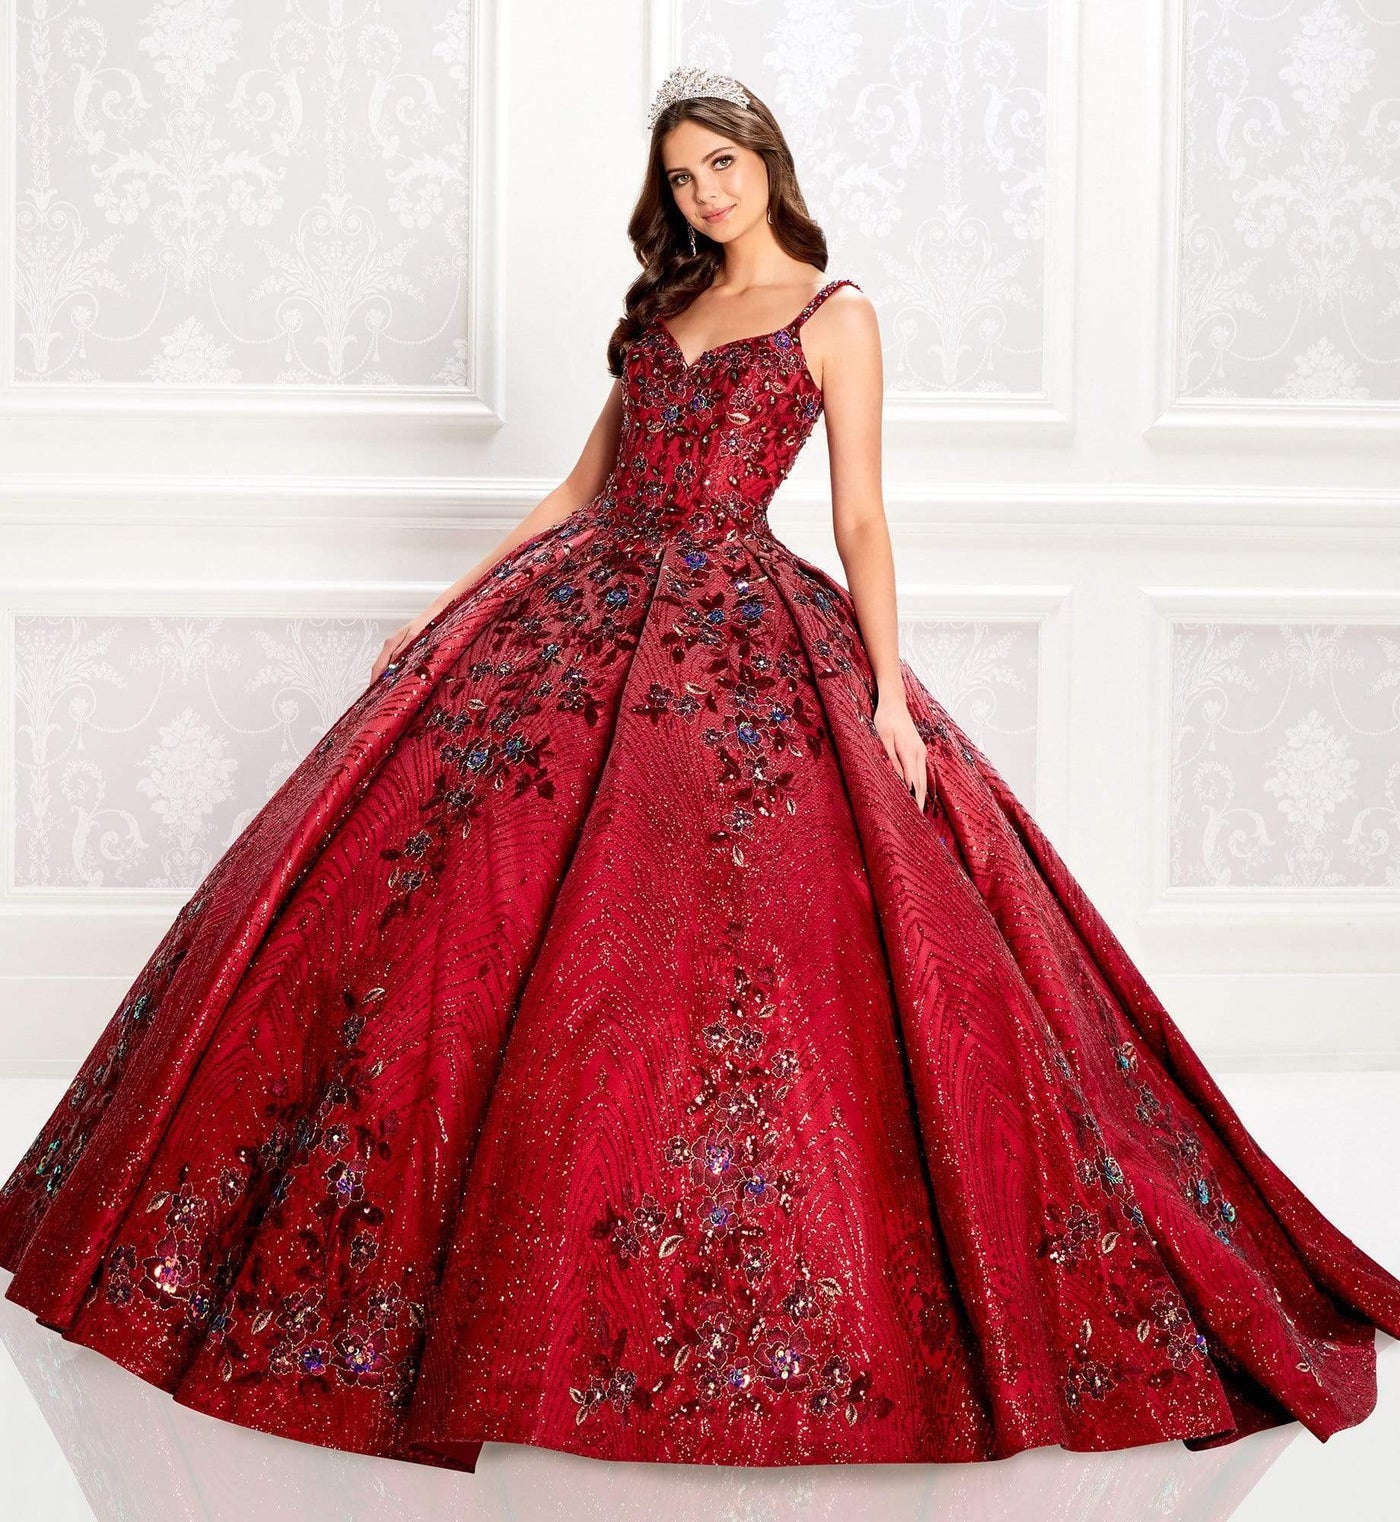 Princesa by Ariana Vara - PR22023 Beaded Sweetheart Gown Quinceanera Dresses